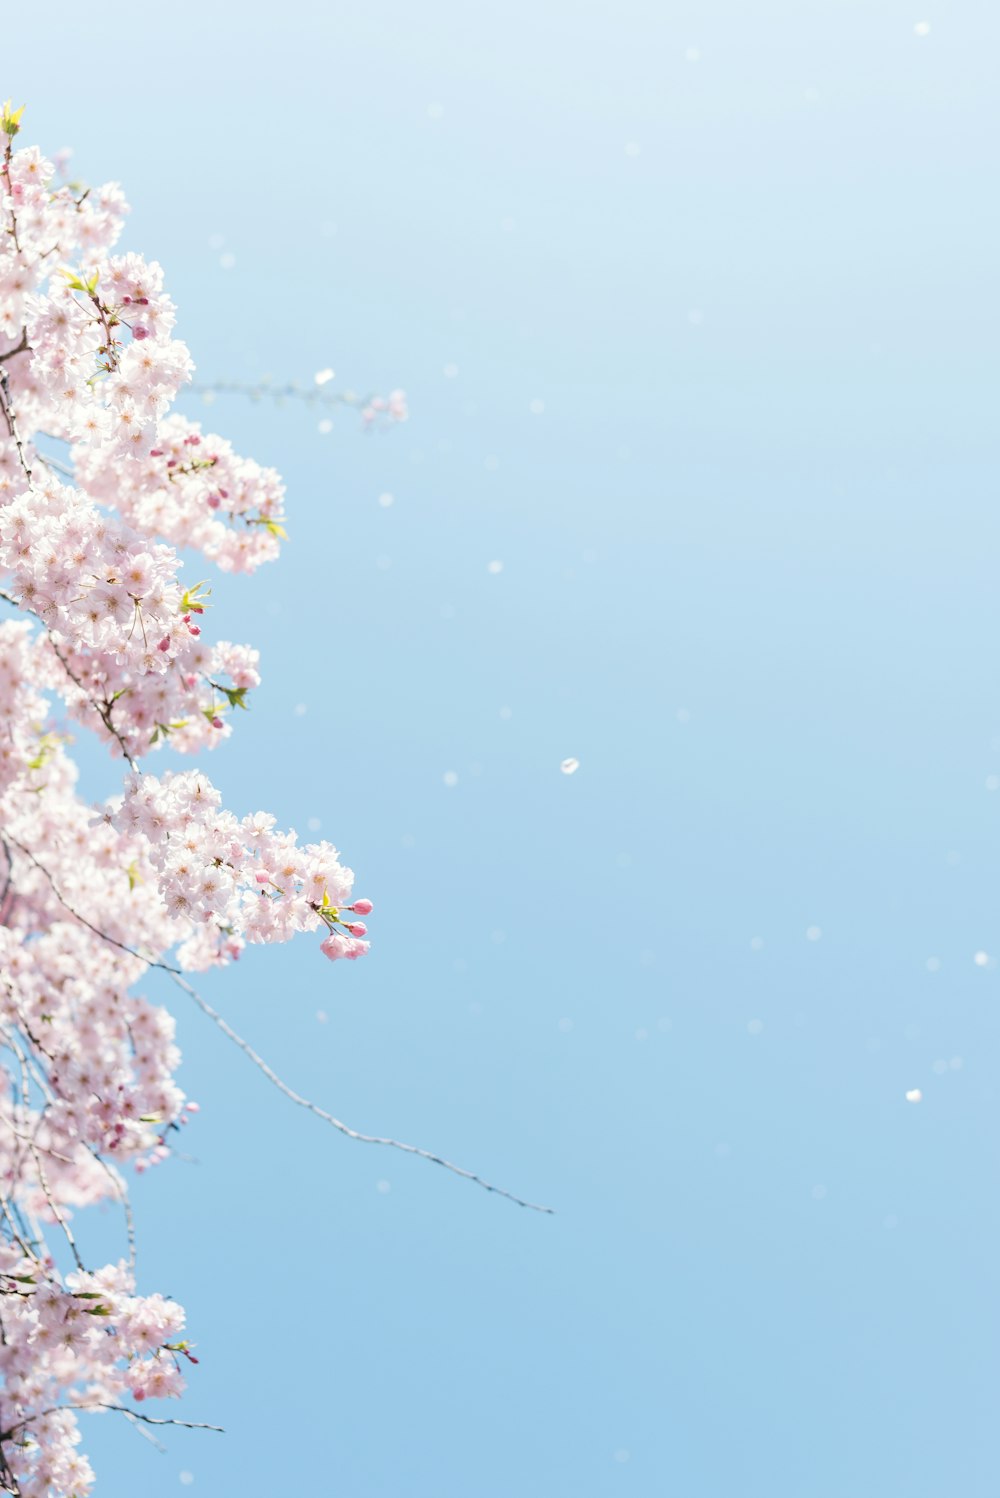 cherry blossom under blue sky